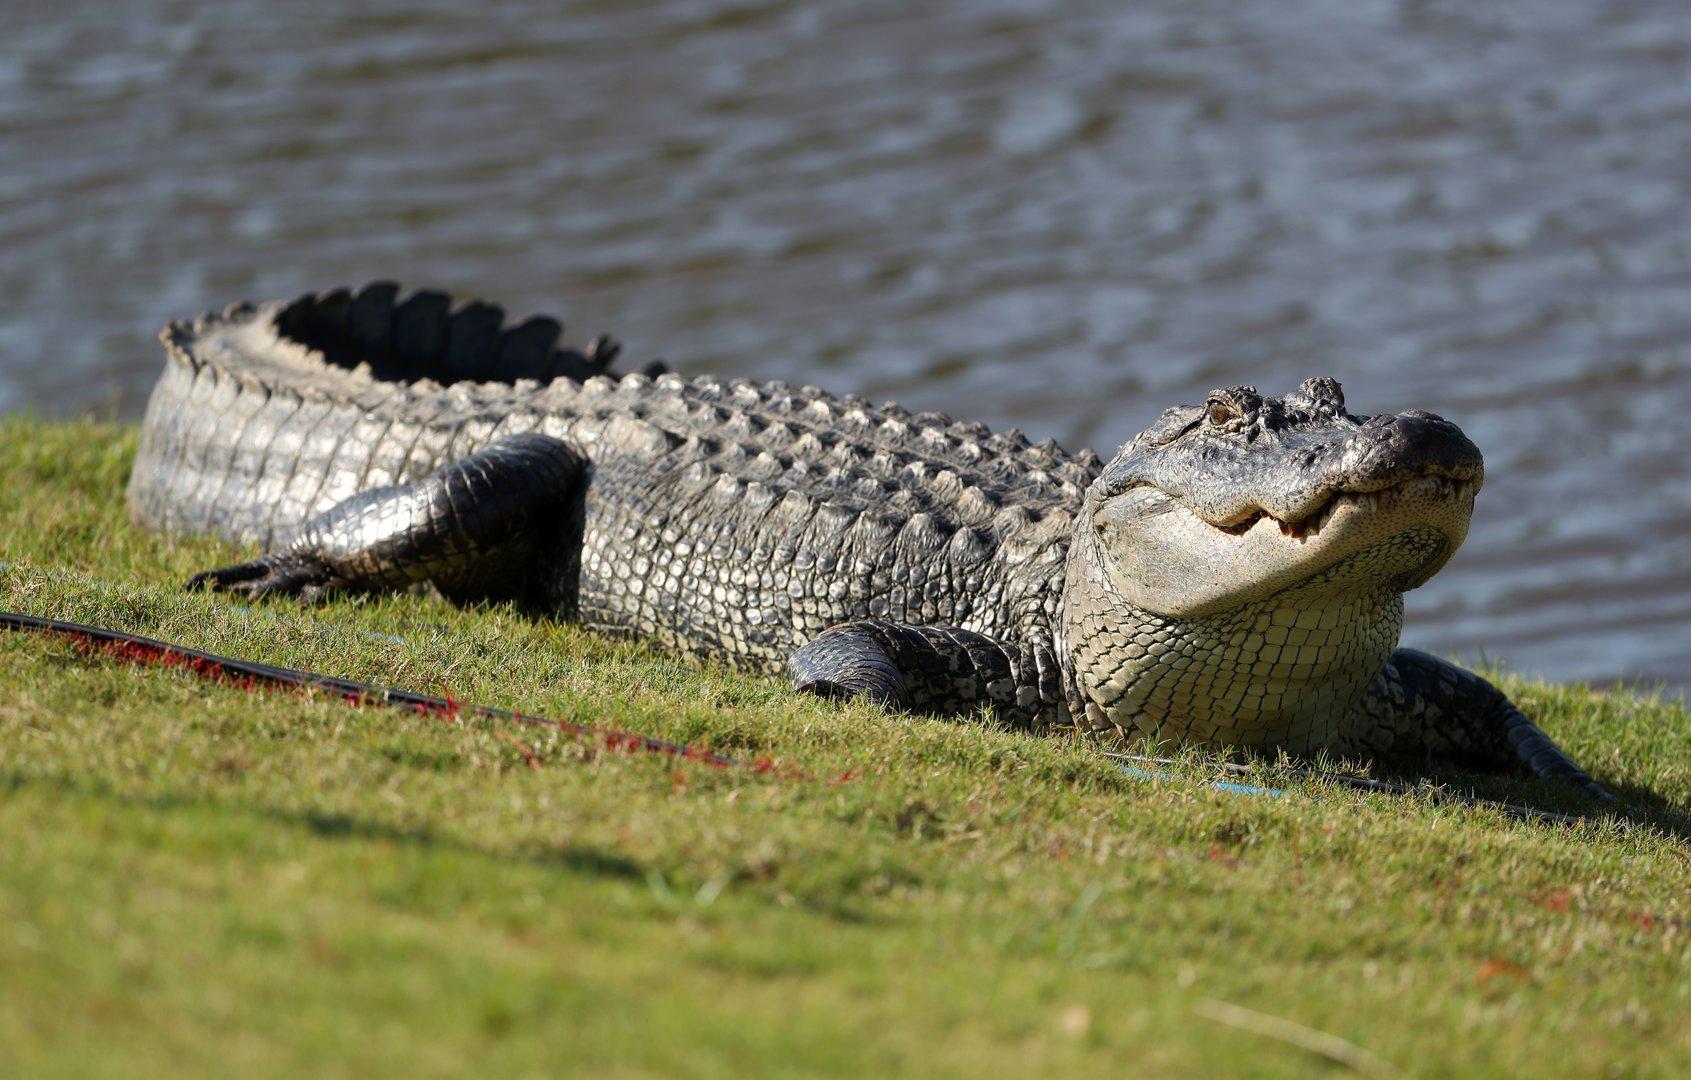 Männer füttern Alligator mit Bier: Festnahme